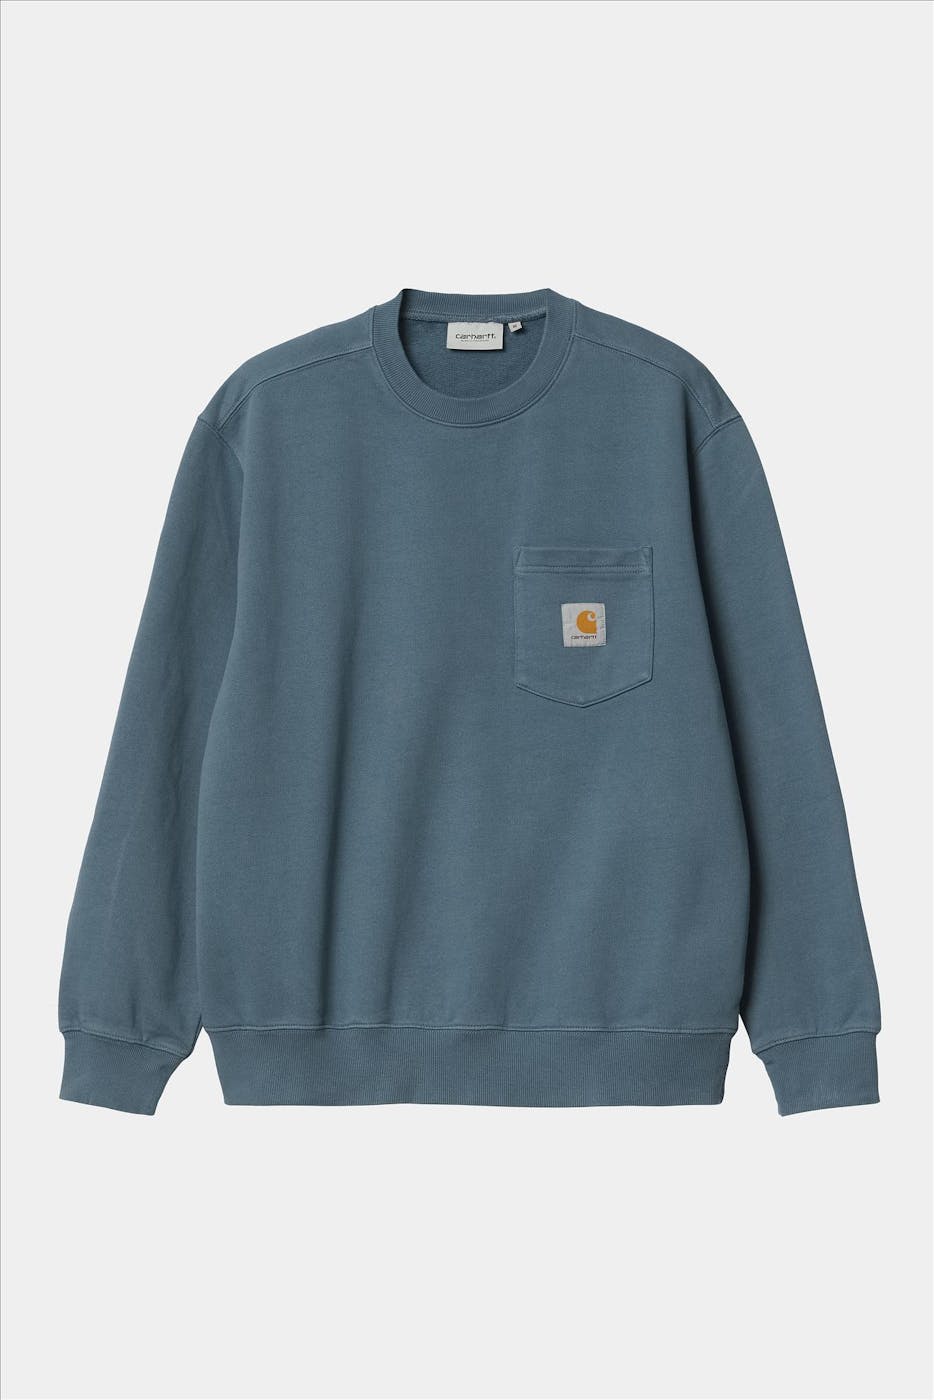 Carhartt WIP - Blauwe Pocket sweater